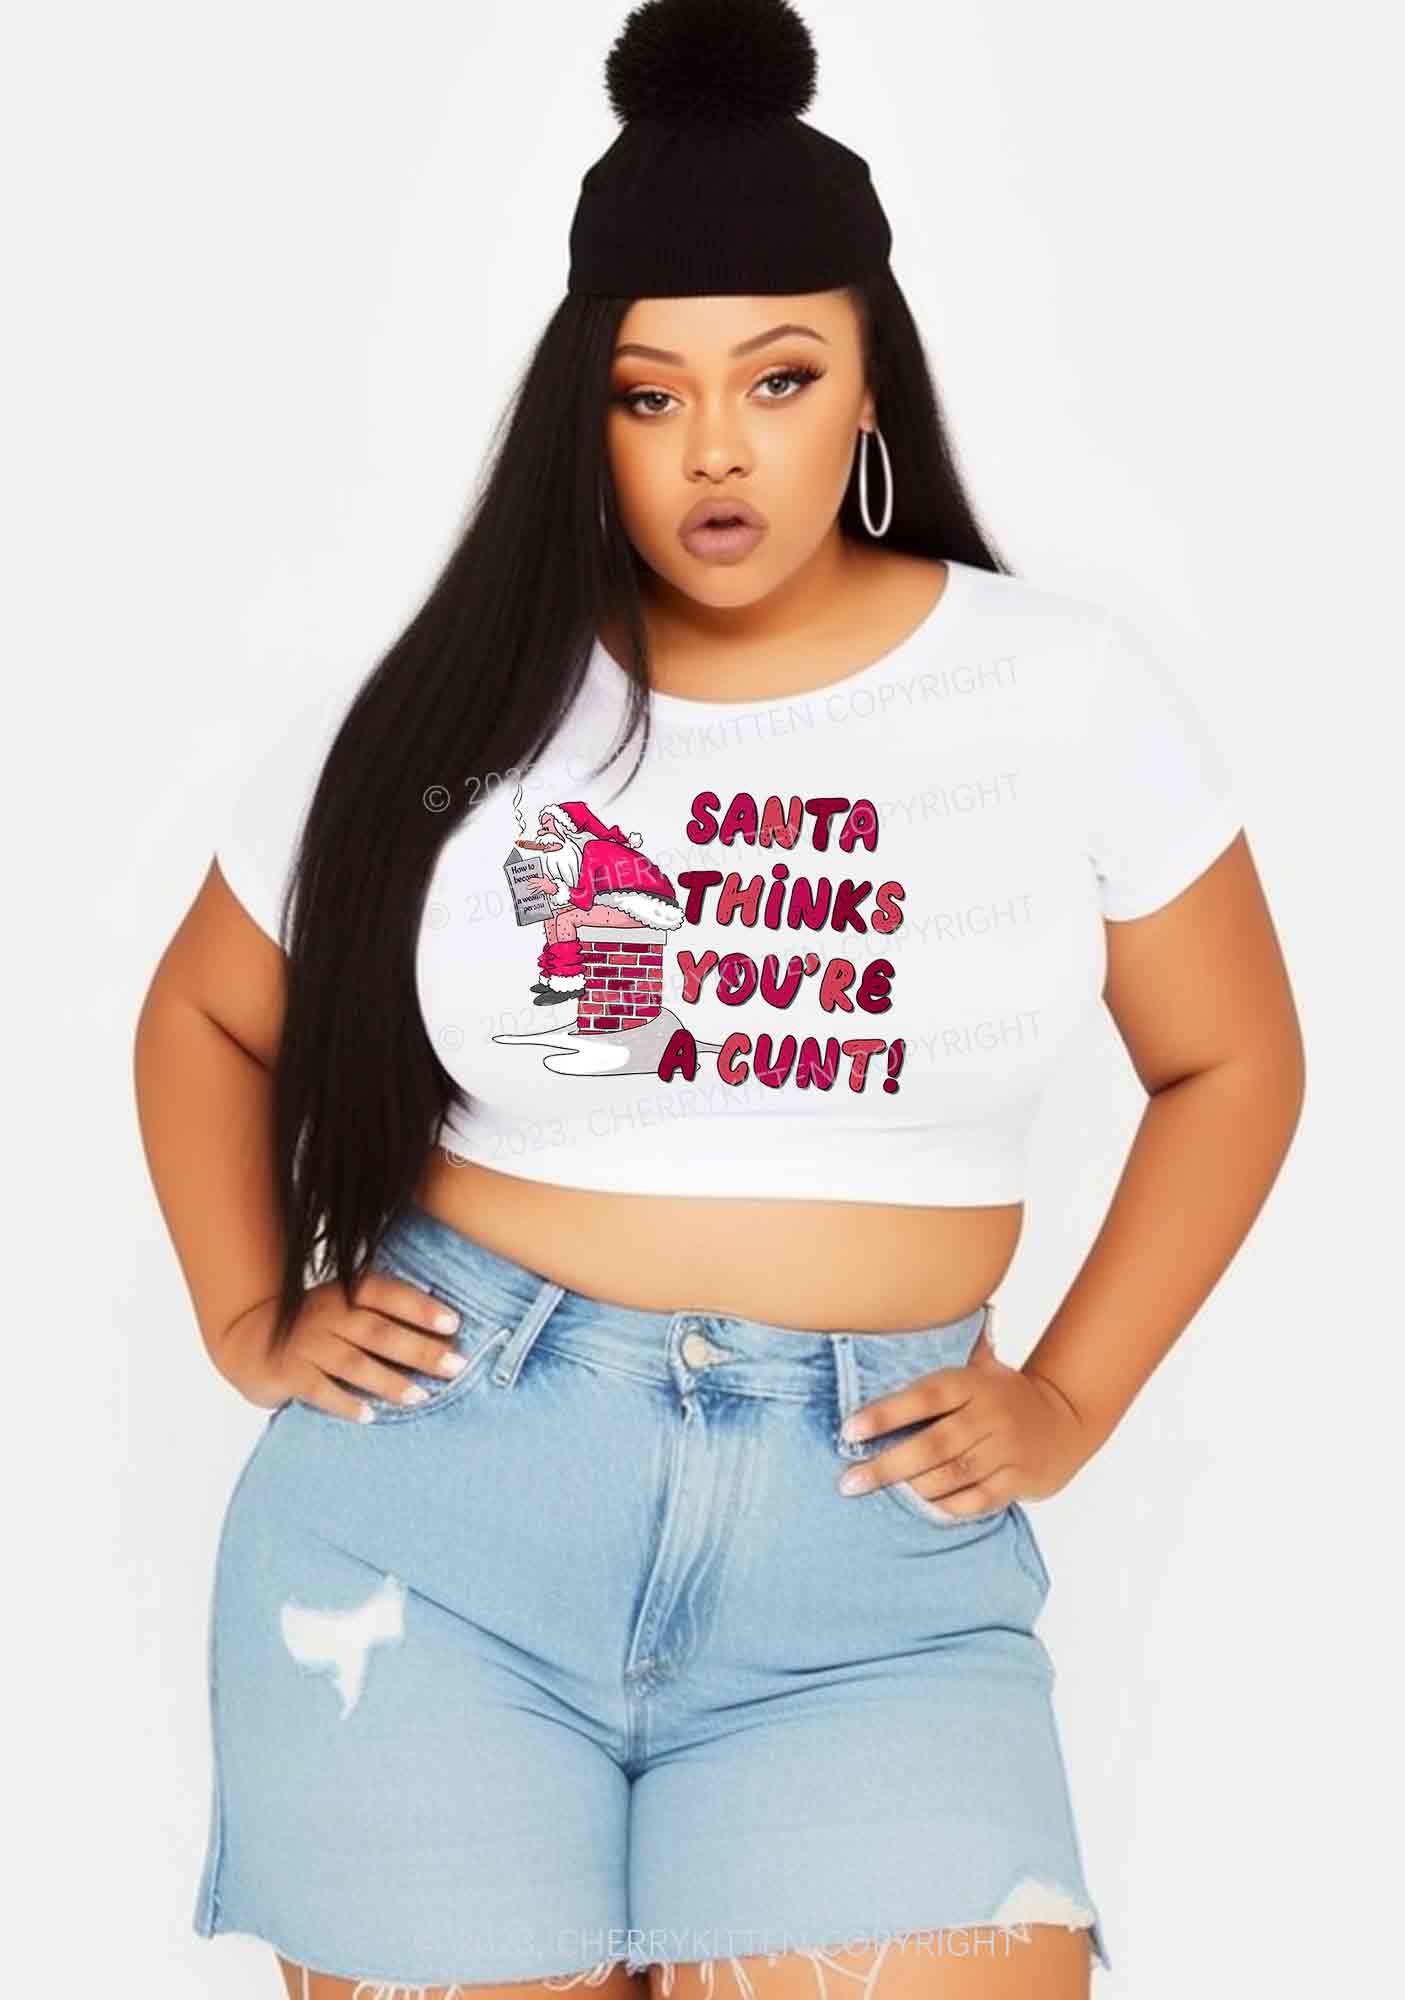 Santa Thinks You're  A Cxxt Christmas Baby Tee Cherrykitten